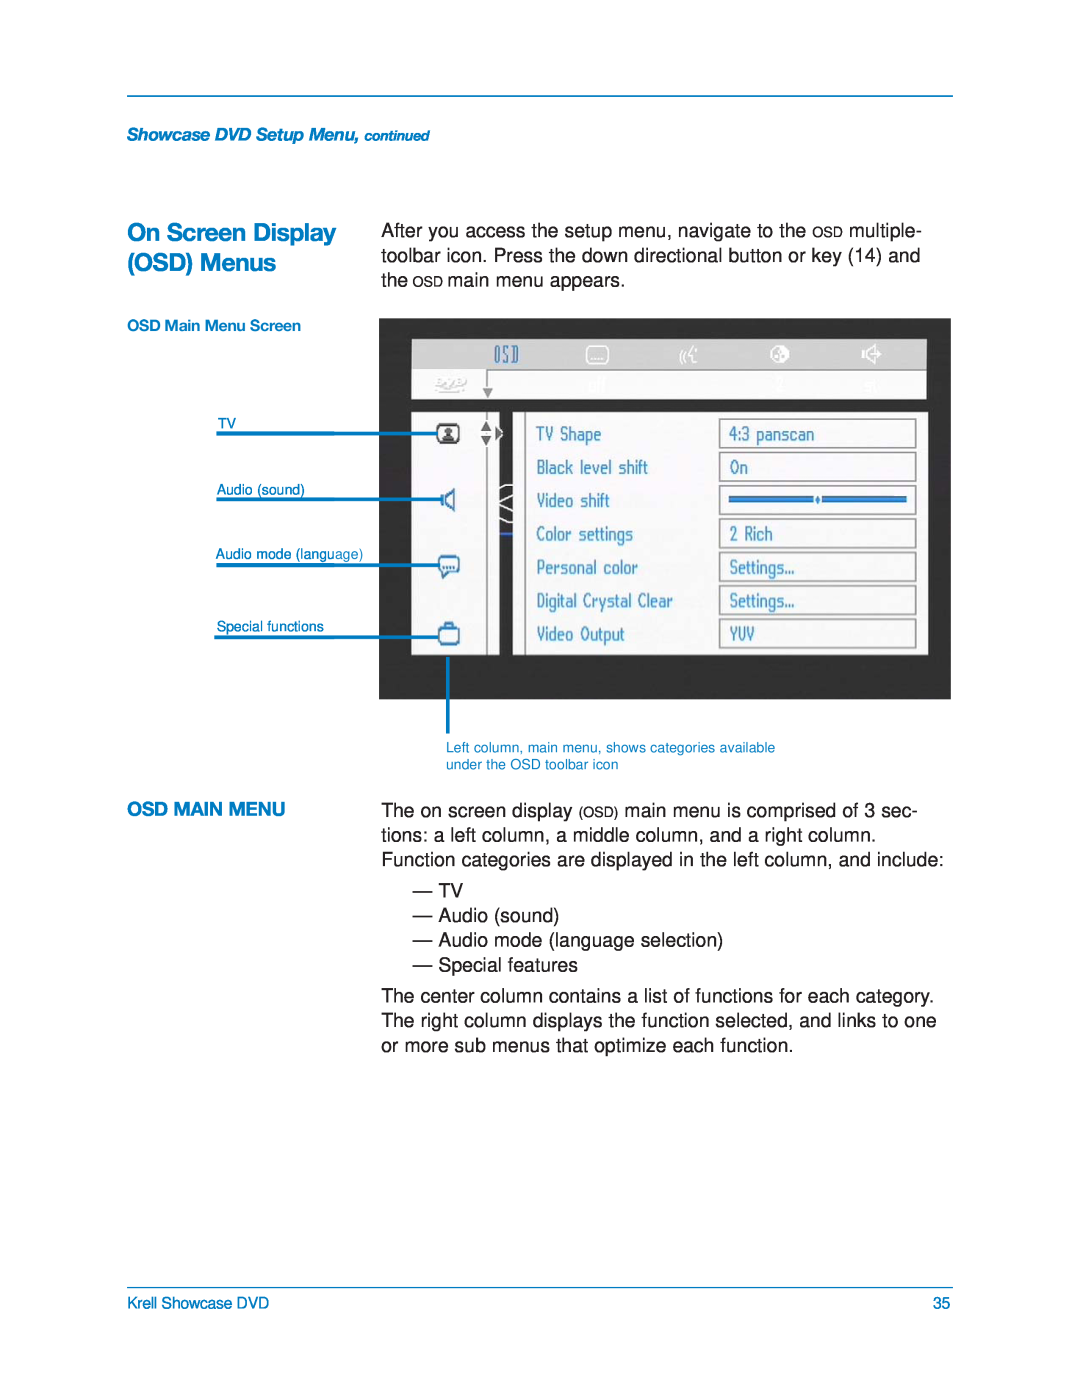 Krell Industries DVD Player manual On Screen Display OSD Menus, Osd Main Menu 